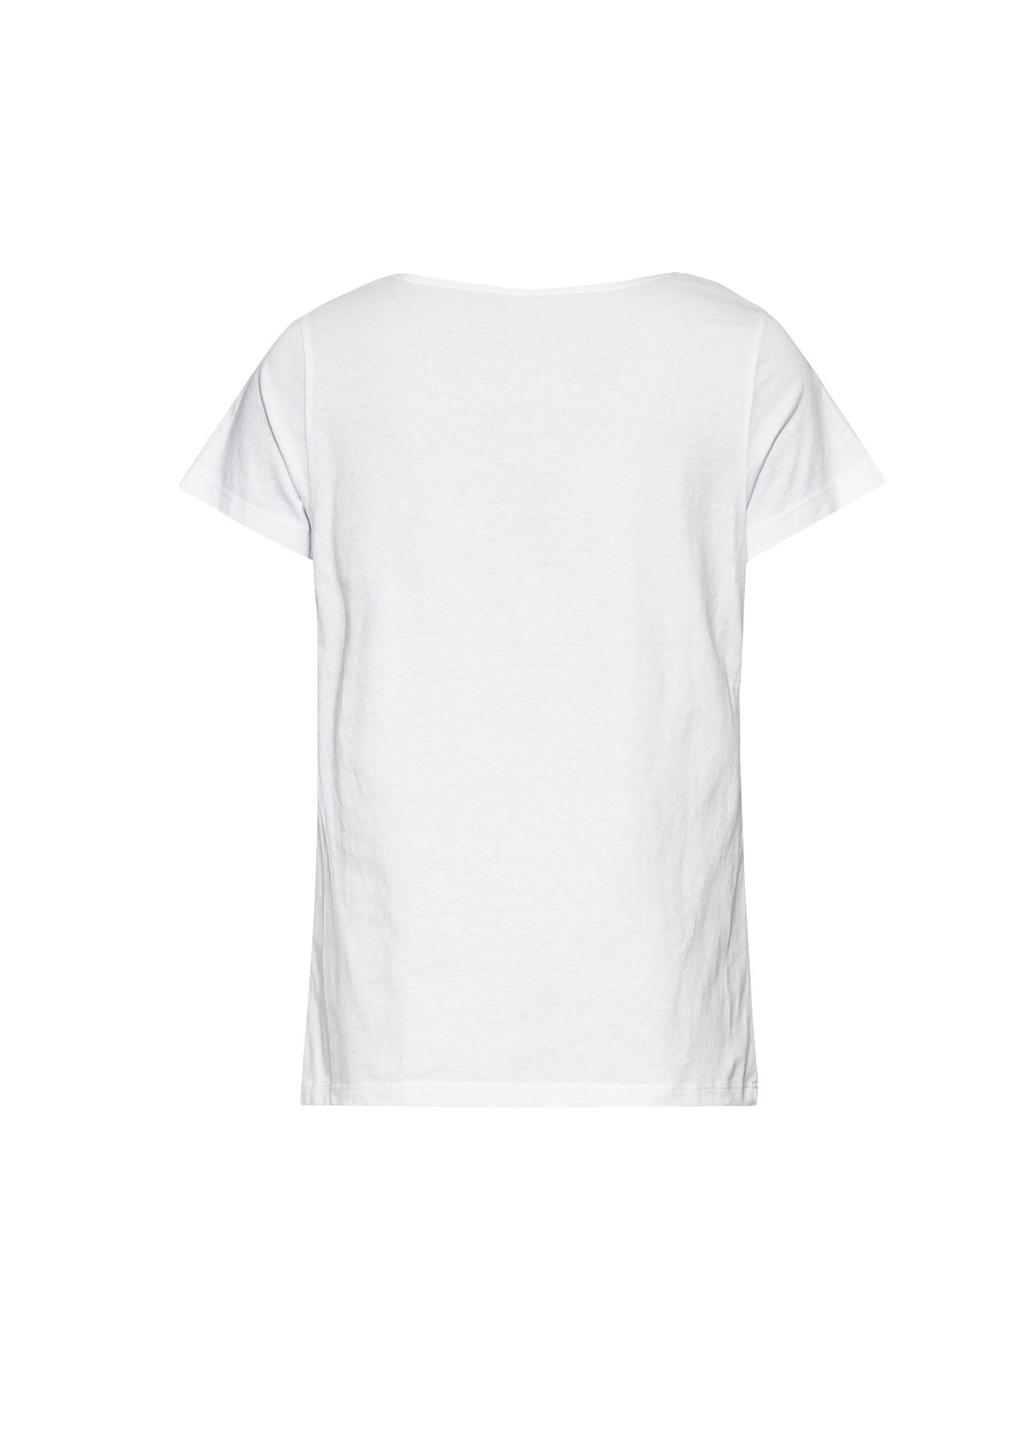 Комбінована всесезон пижама (футболка, шорти) футболка + шорти Esmara